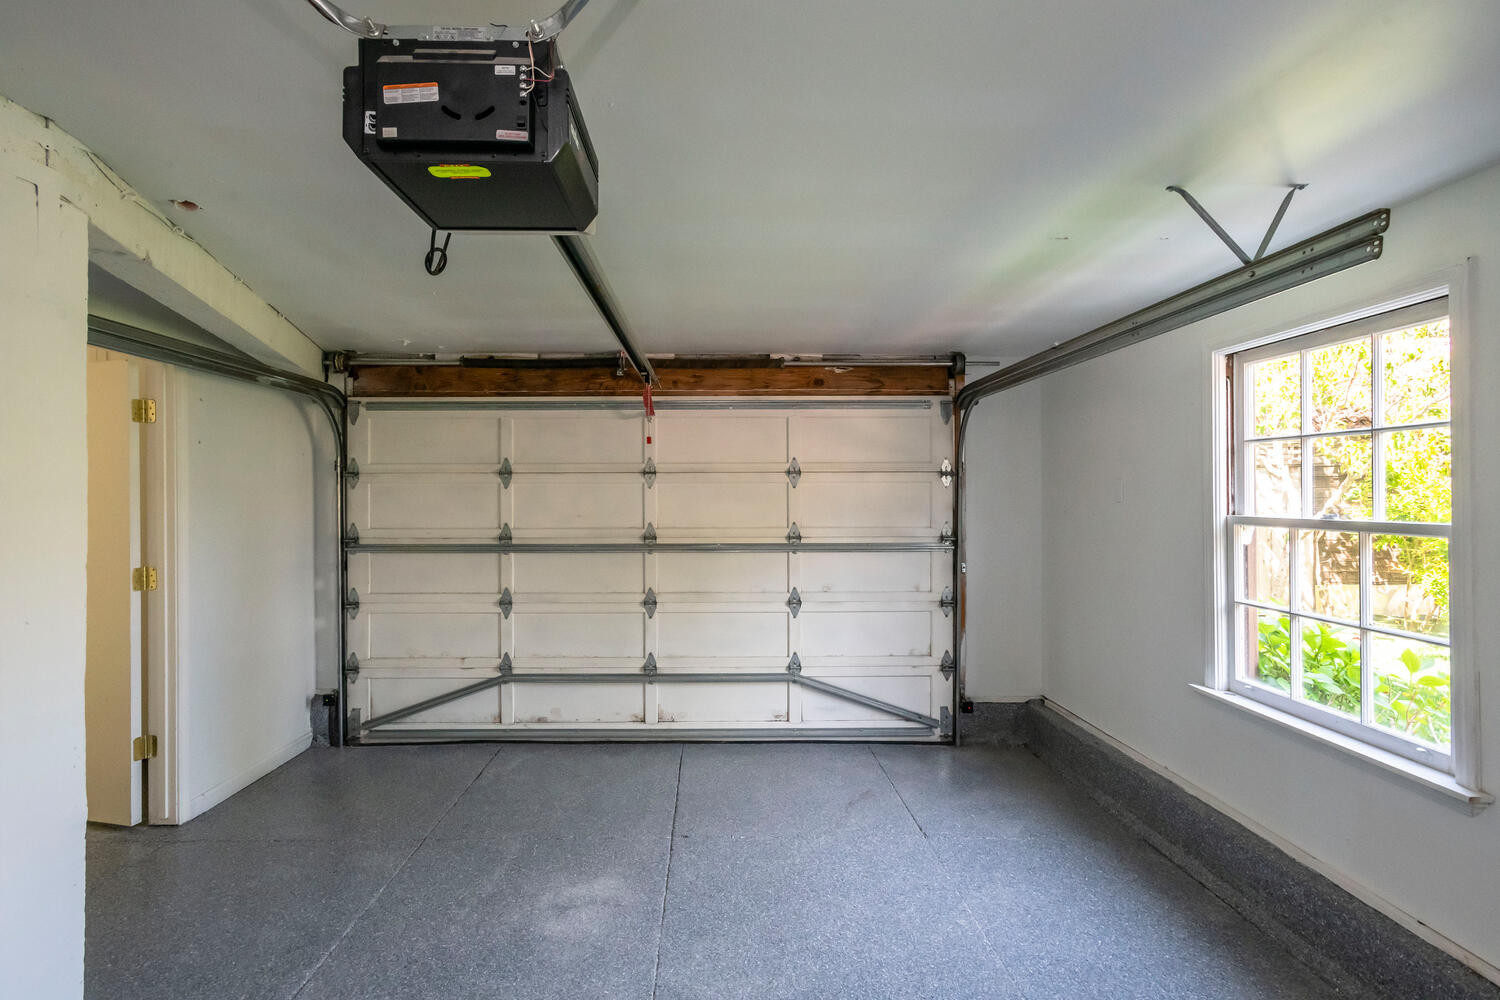 2110 Poppy Drive Garage Interior in Easton Addition Neighborhood in Burlingame.